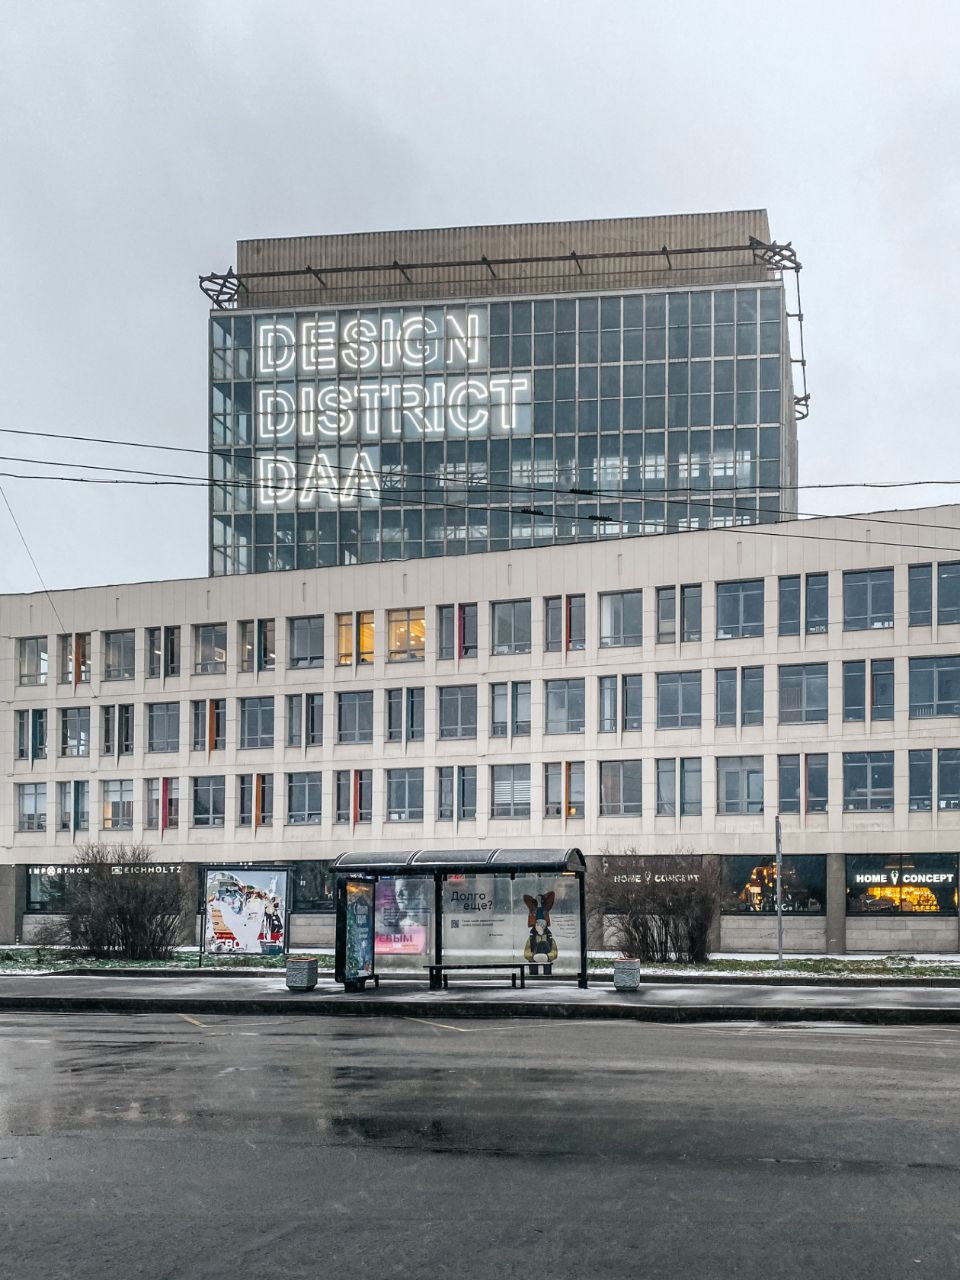 Design district daa спб